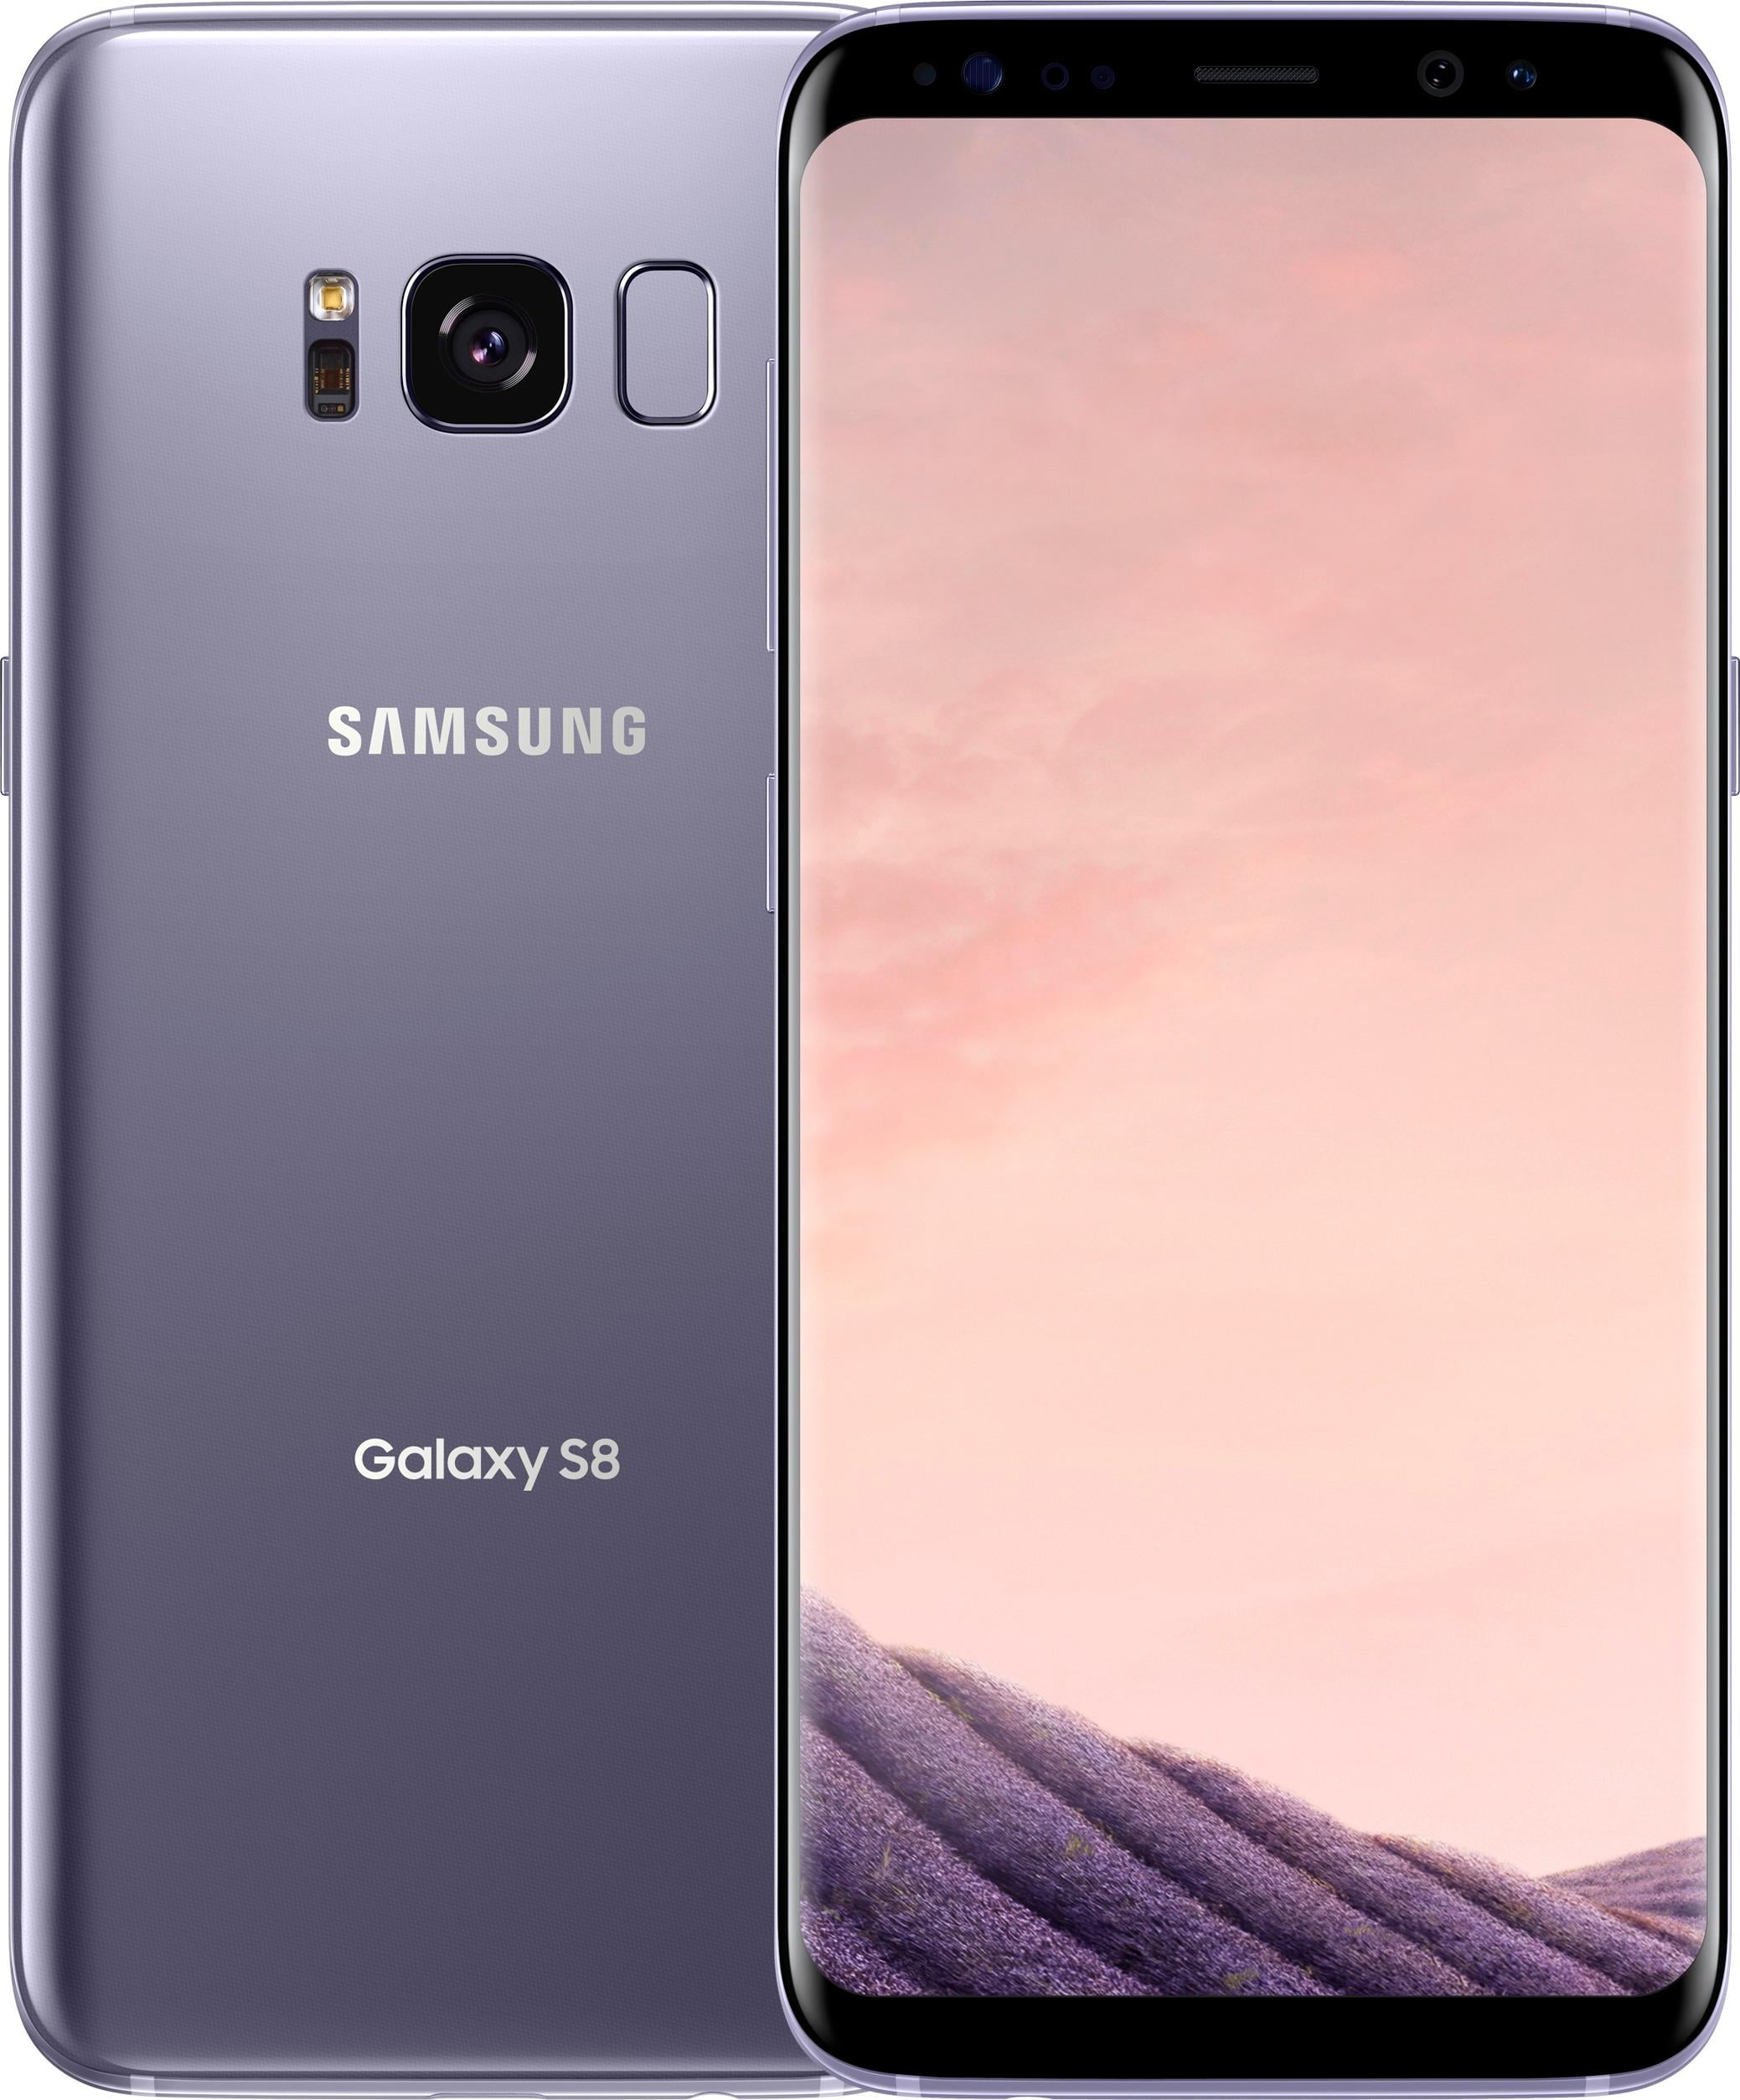  Samsung  Galaxy S8  Plus  64GB Verizon GSM UNLOCKED Android 